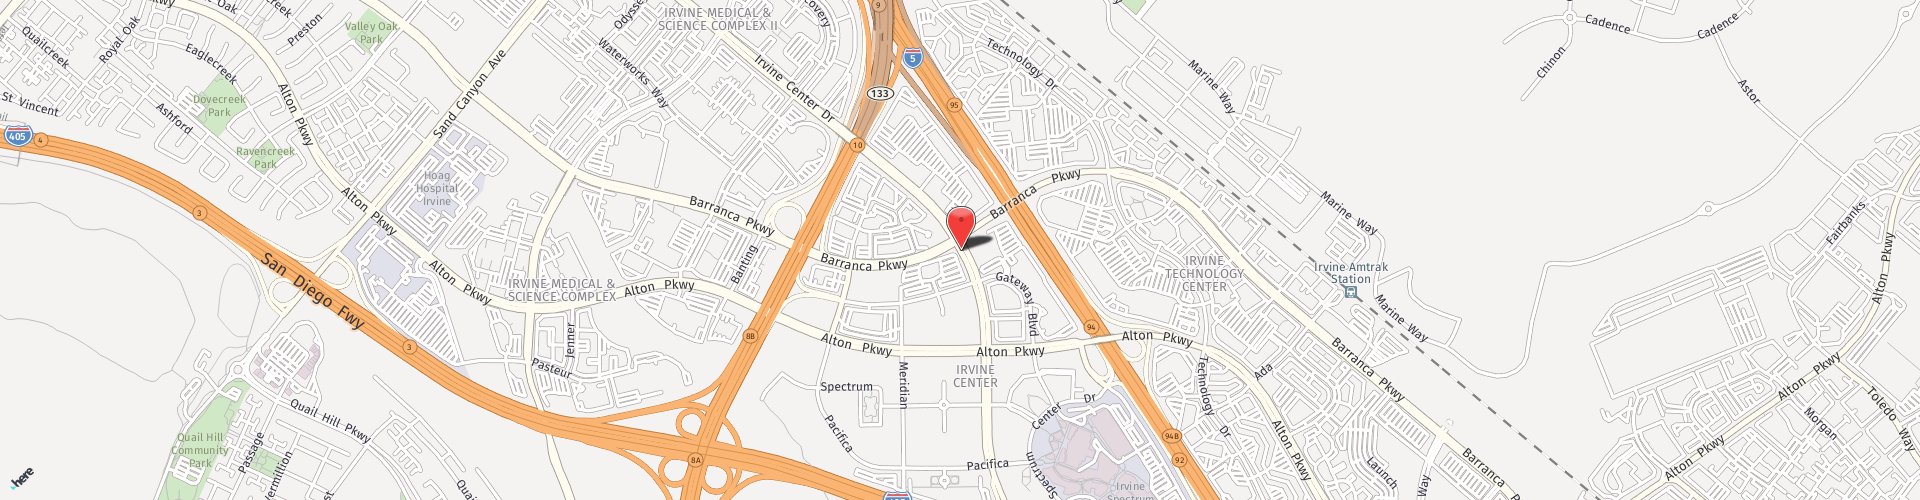 Location Map: 7700 Irvine Center Drive Irvine, CA 92618